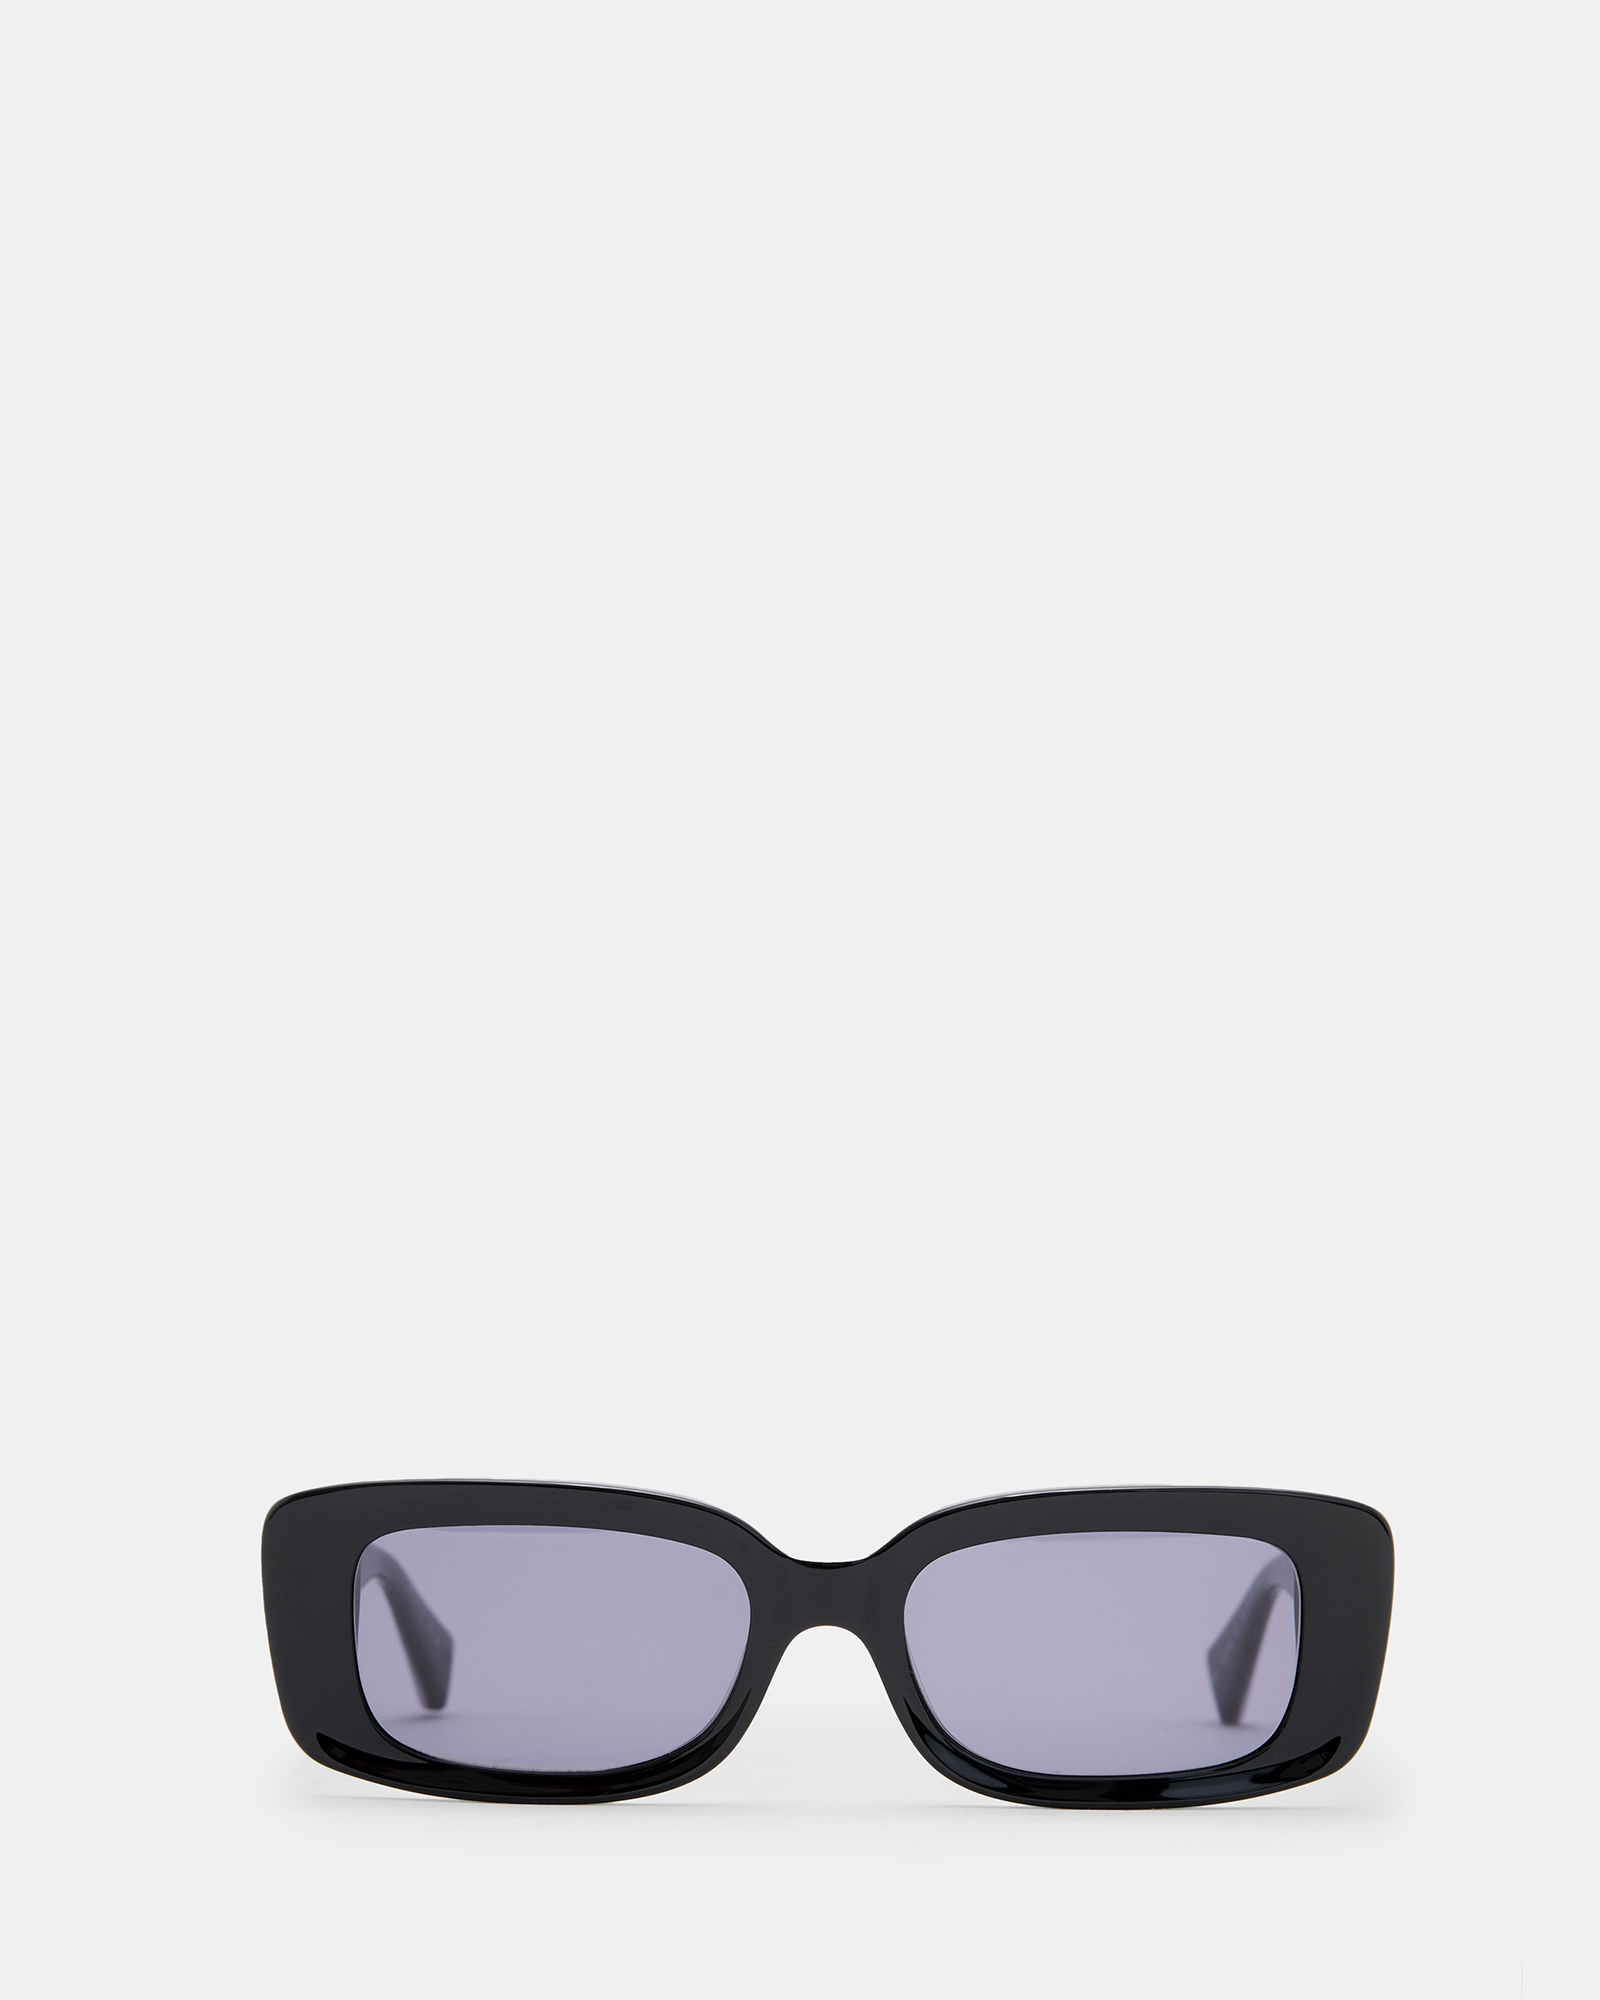 AllSaints Sonic Rectangular Sunglasses,, Size: One